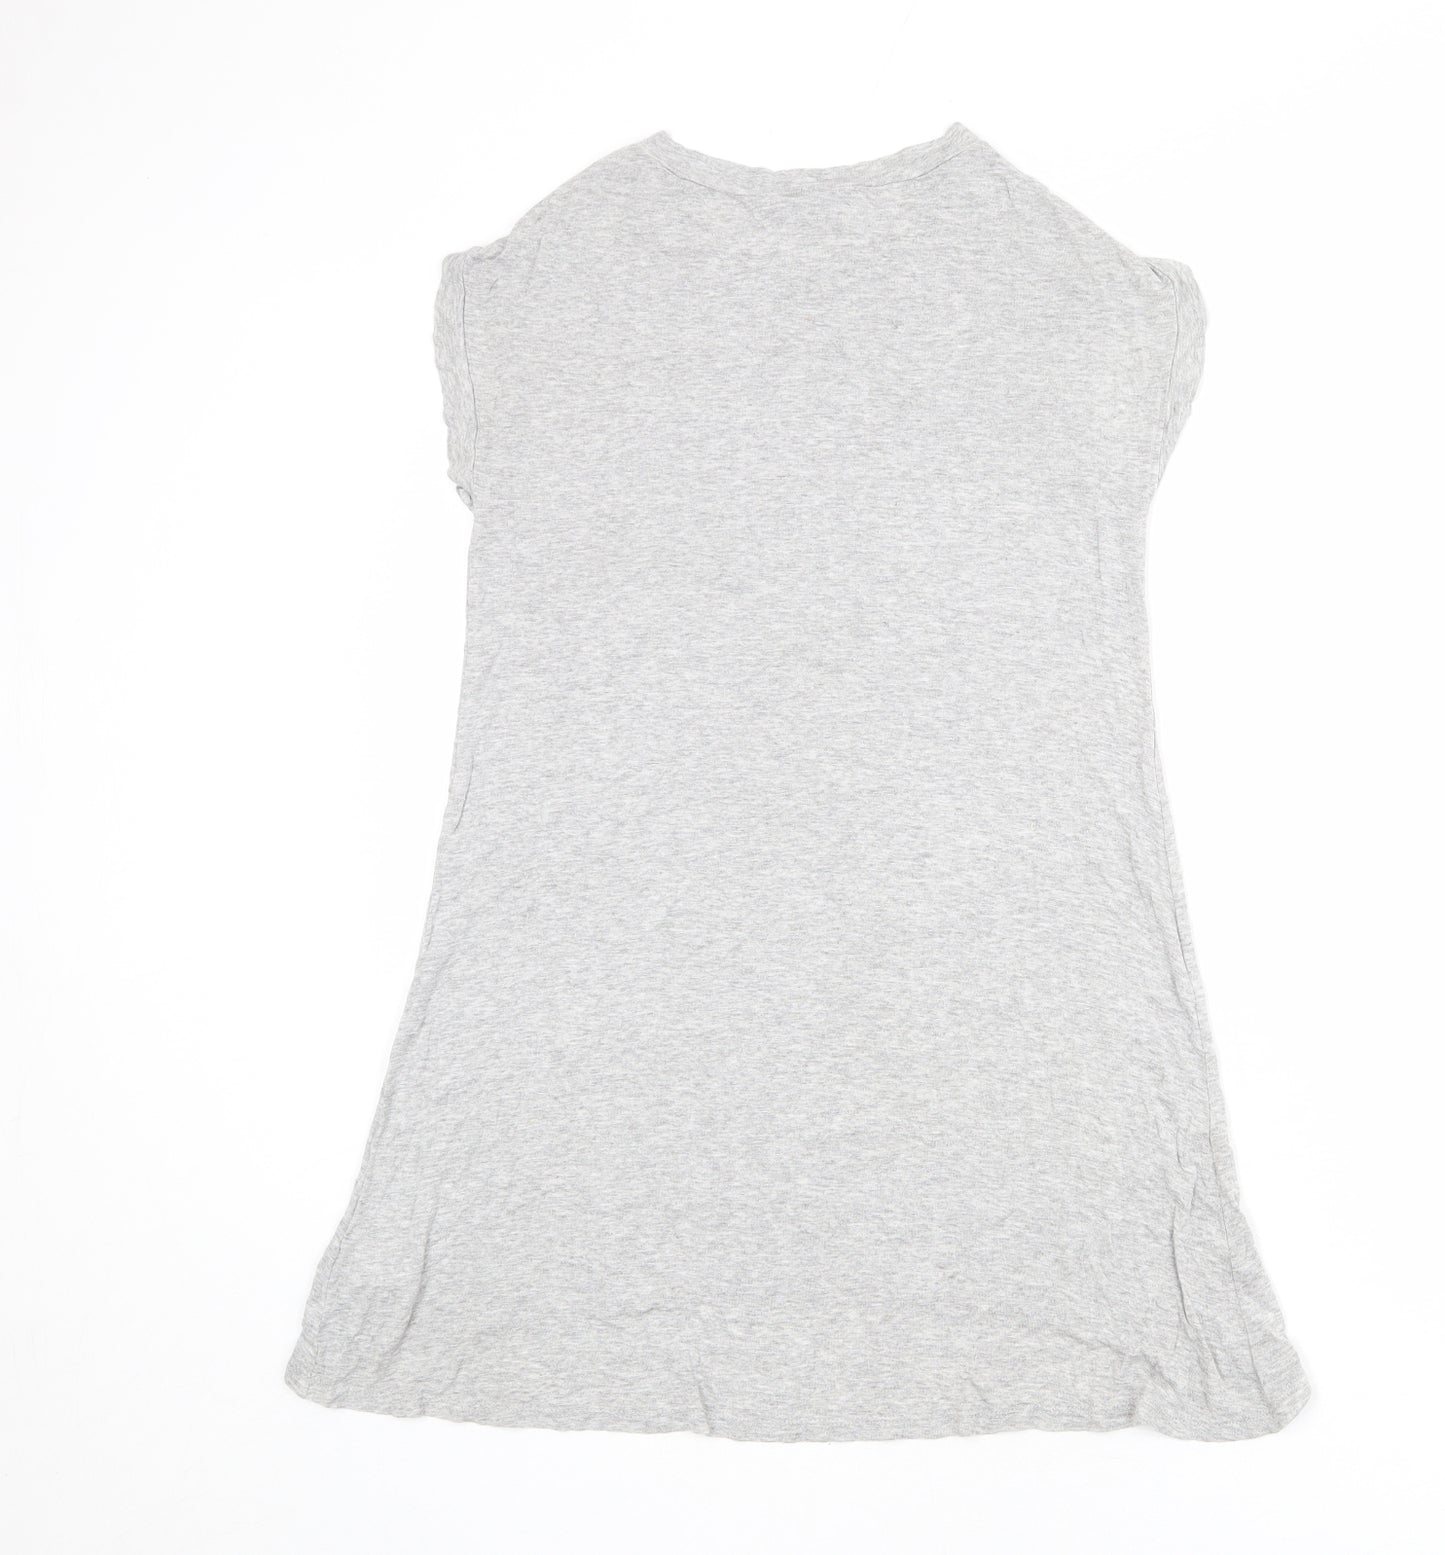 Topshop Womens Grey Viscose T-Shirt Dress Size 8 Crew Neck Pullover